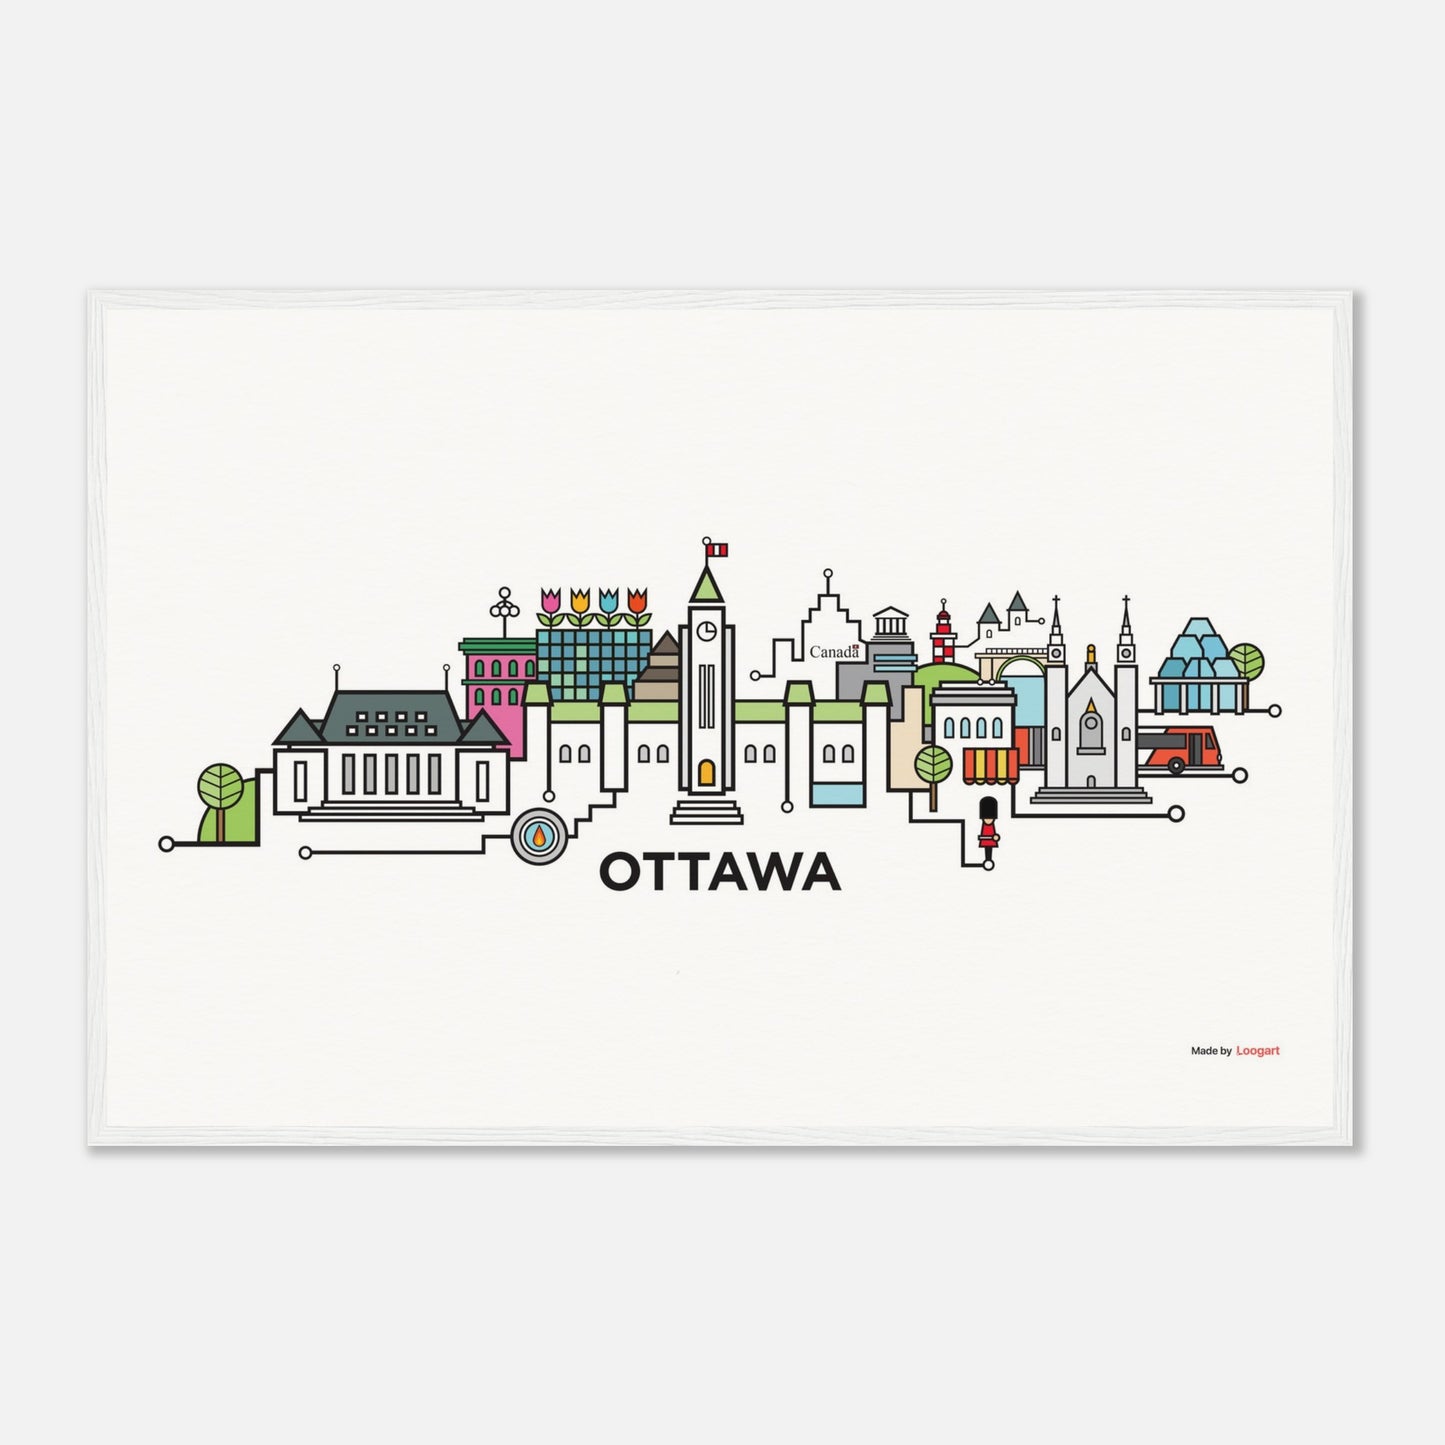 Ottawa CityLine by Loogart